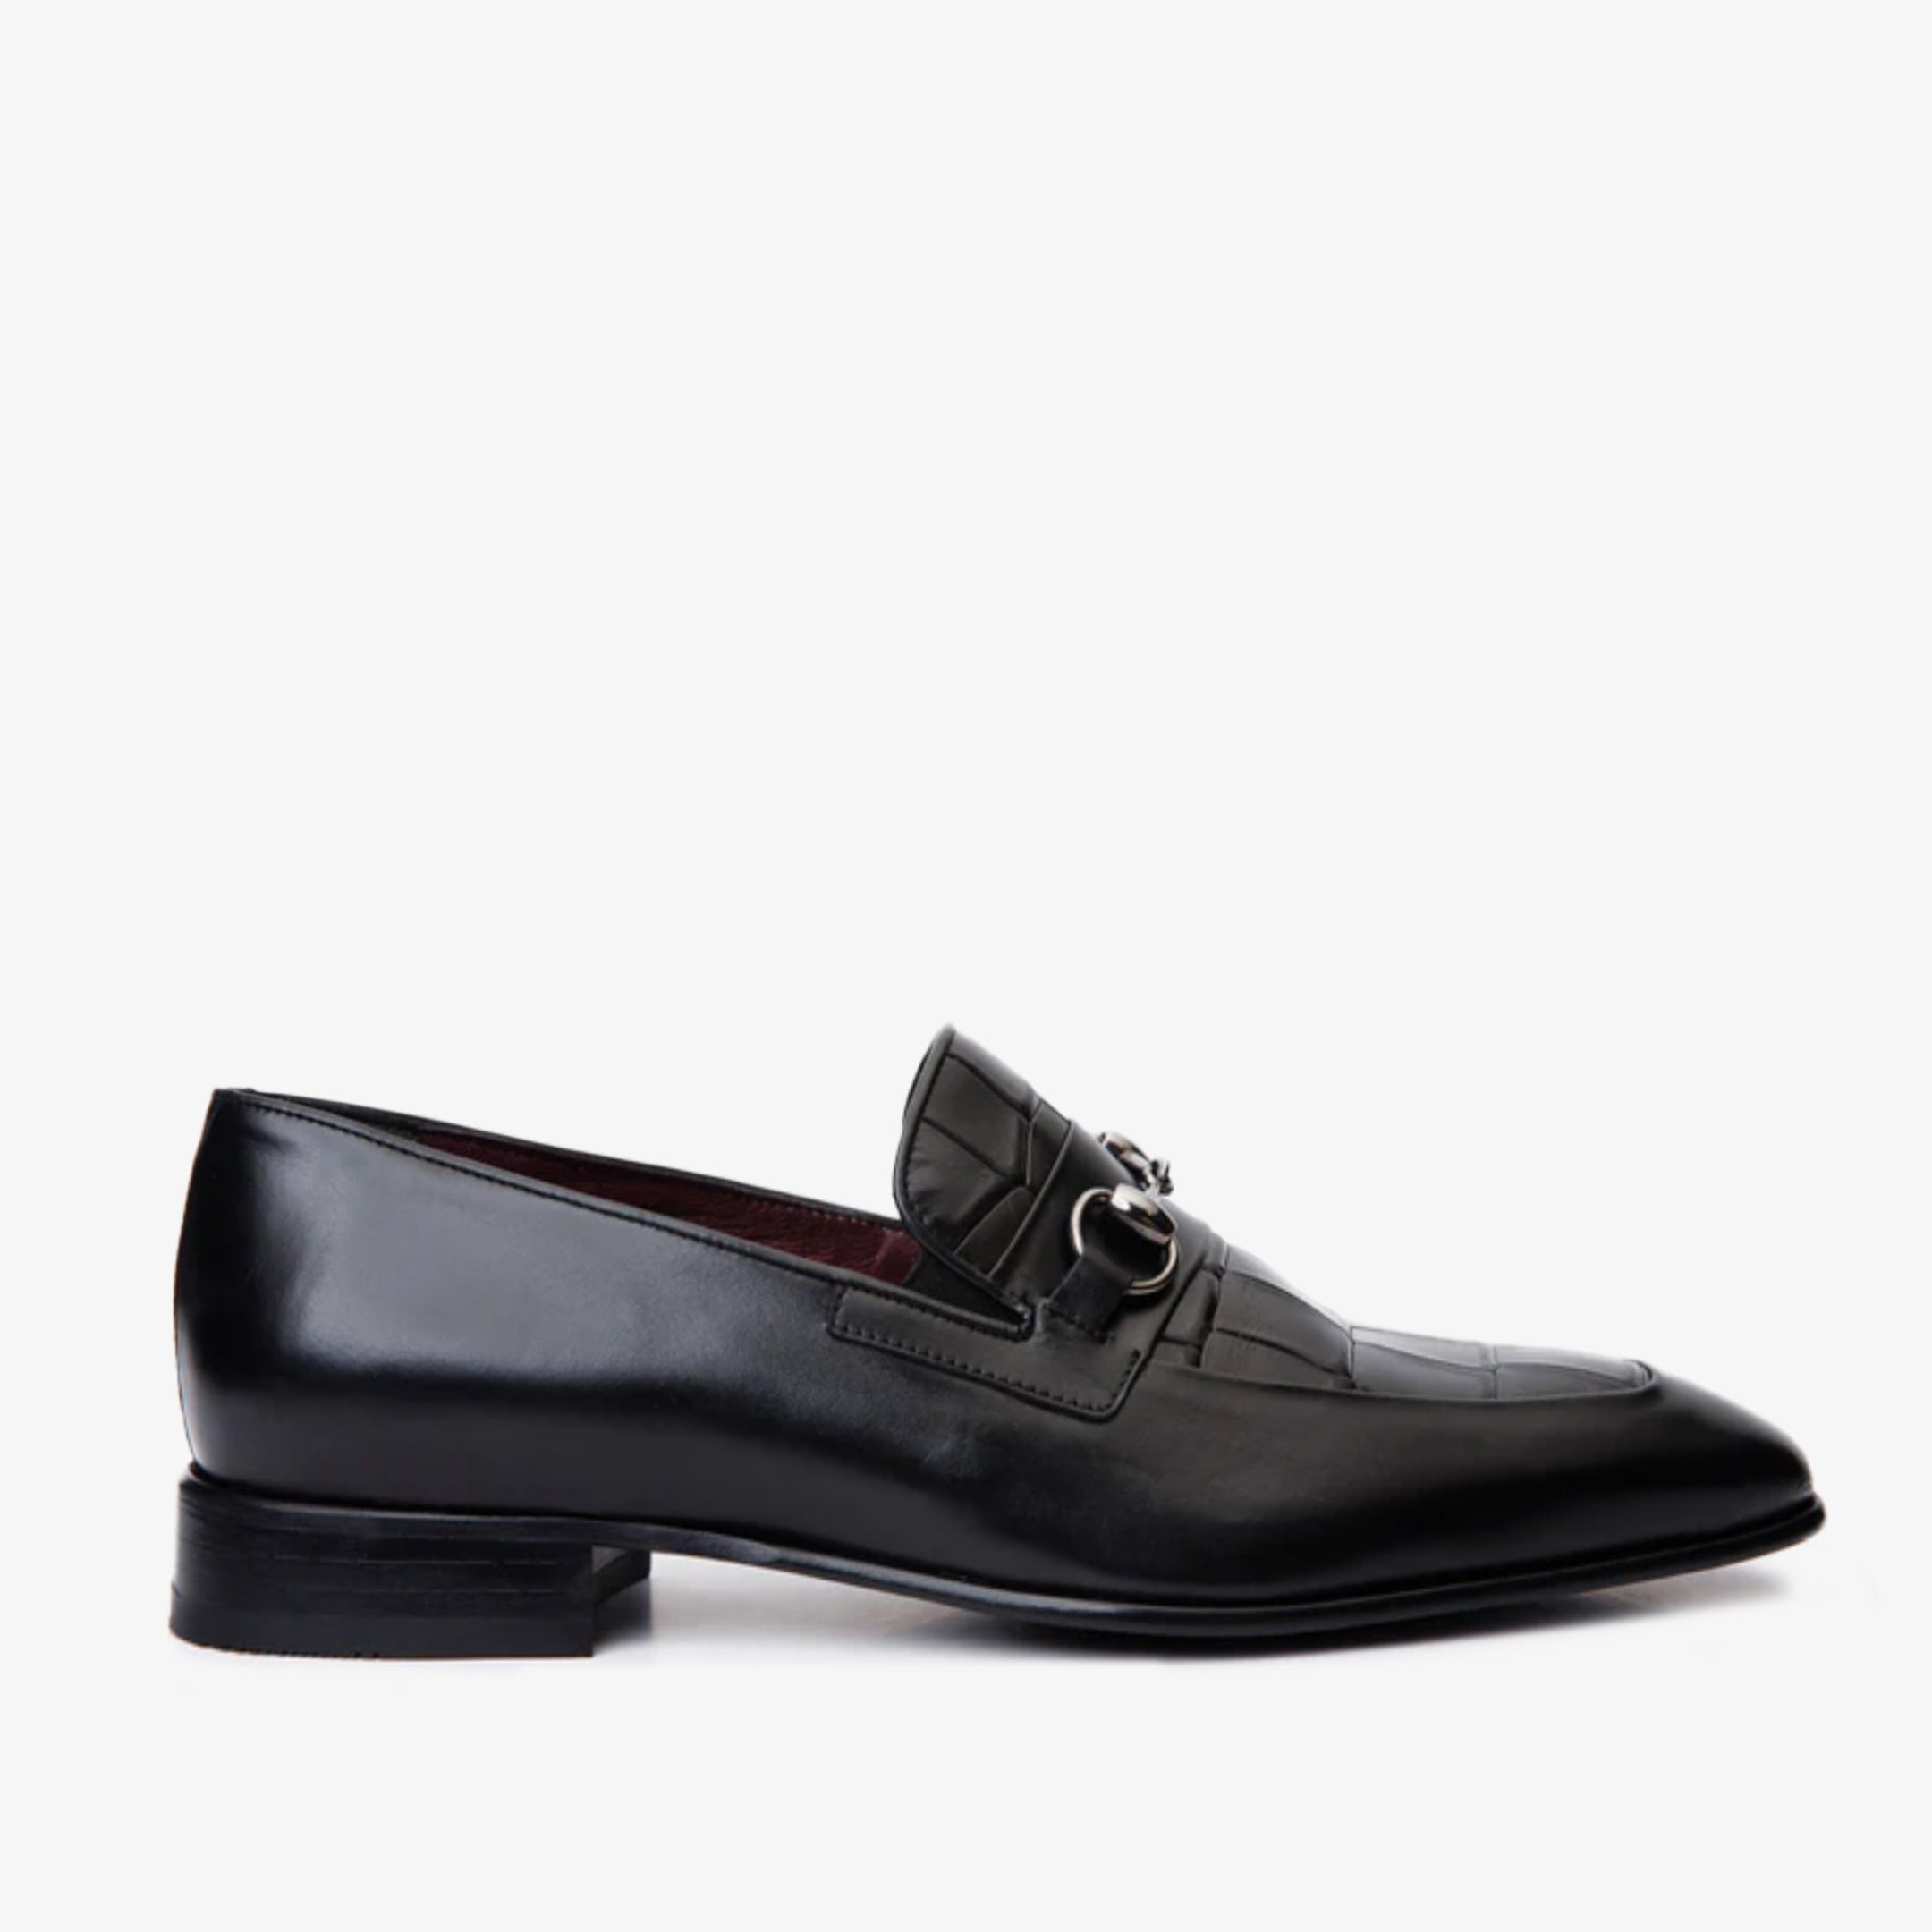 The Pusan Black Leather Bit Loafer Men Shoe